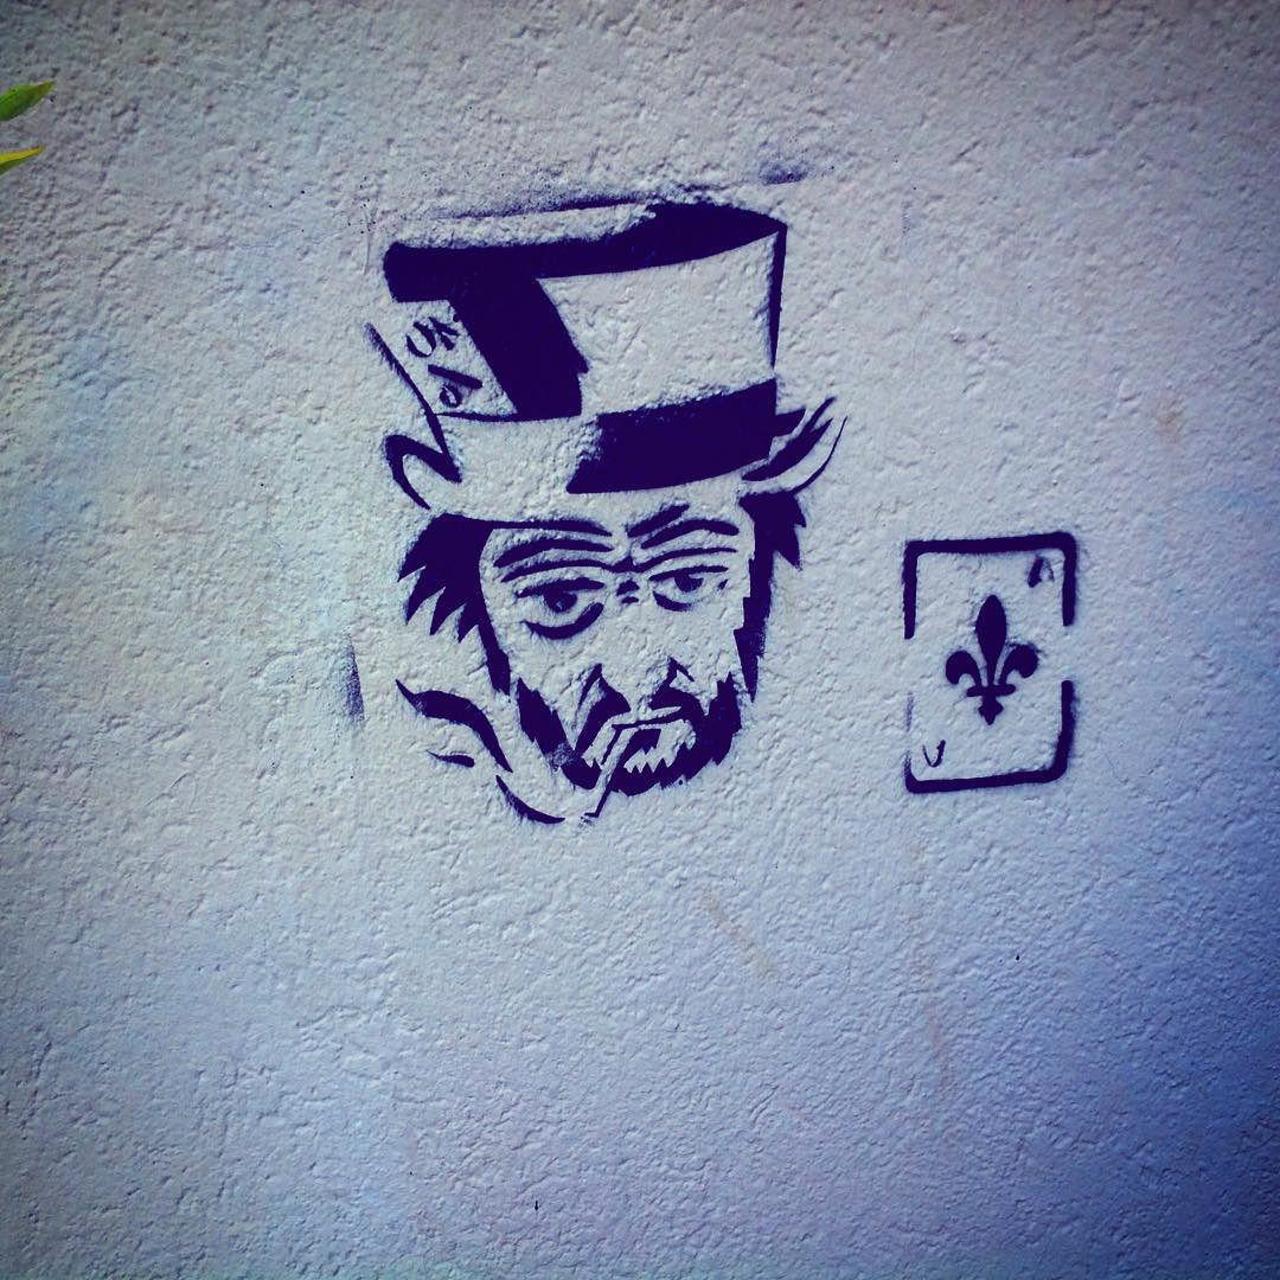 http://ift.tt/1KiqpQt #Paris #graffiti photo by stefetlinda http://ift.tt/1VY78MK #StreetArt http://t.co/e4iDsCvl2P